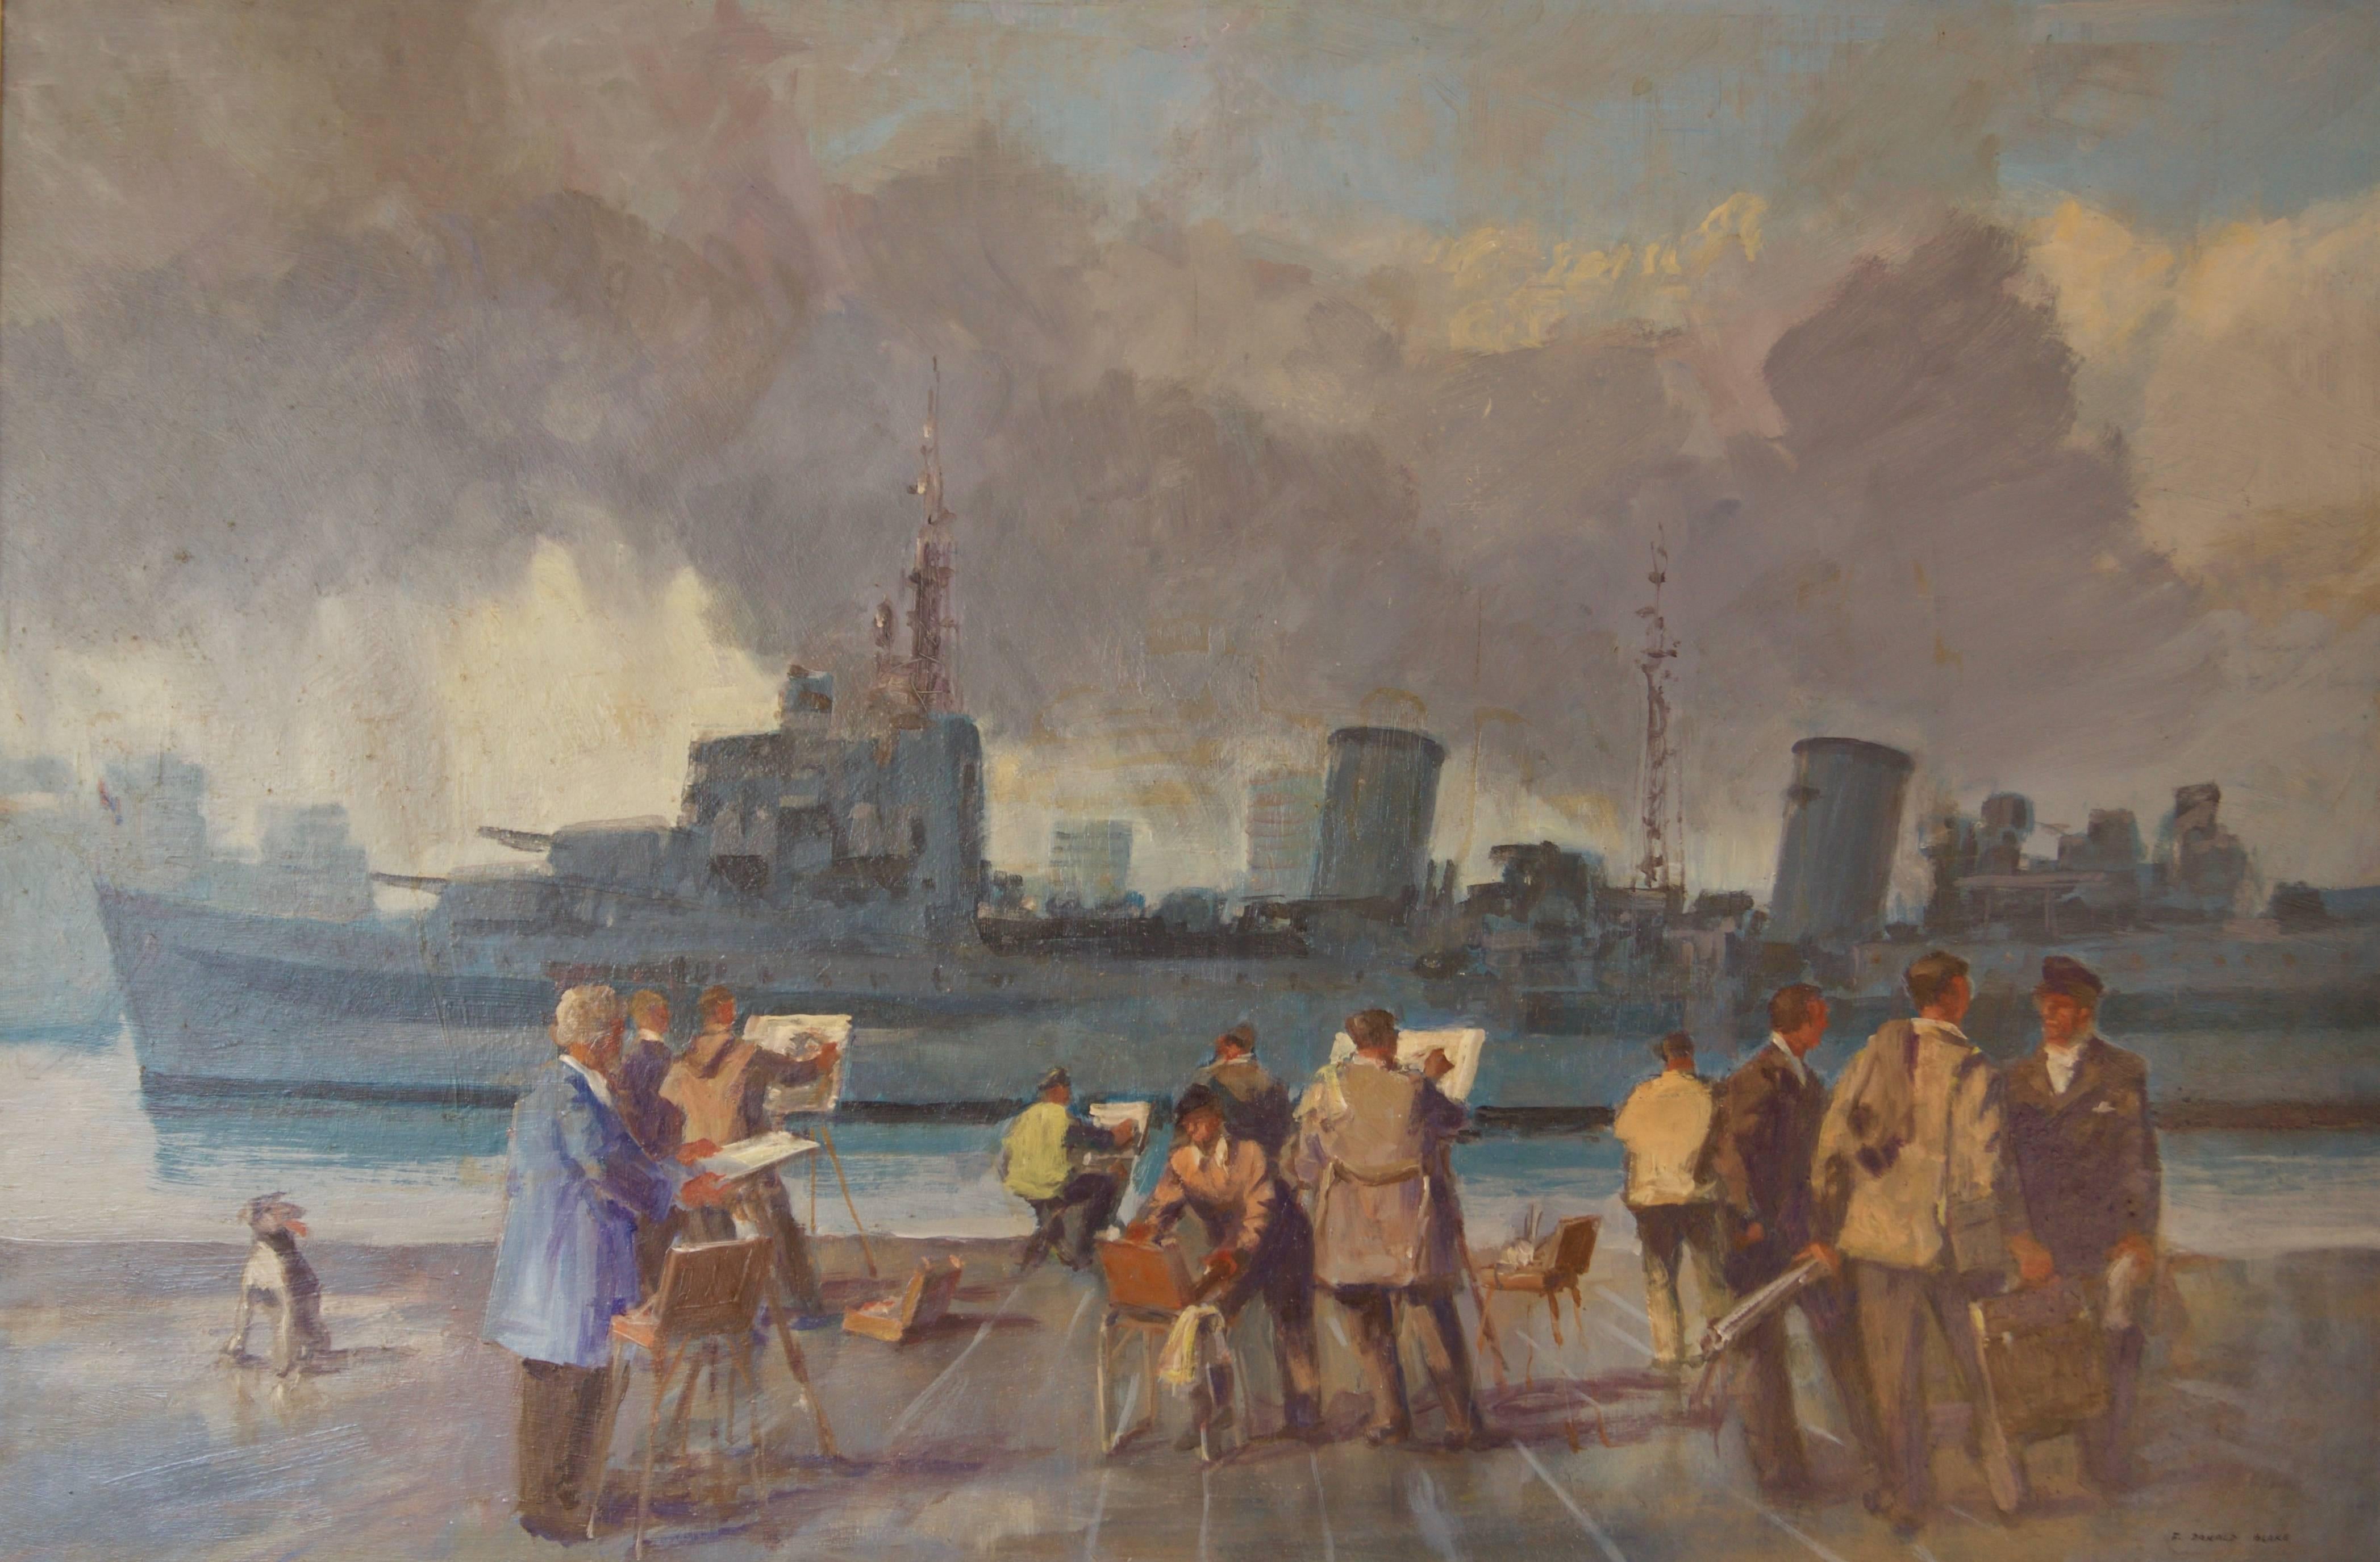 Wapping Group of Artists by the Thames - Huile du milieu du 20e siècle de Donald Blake